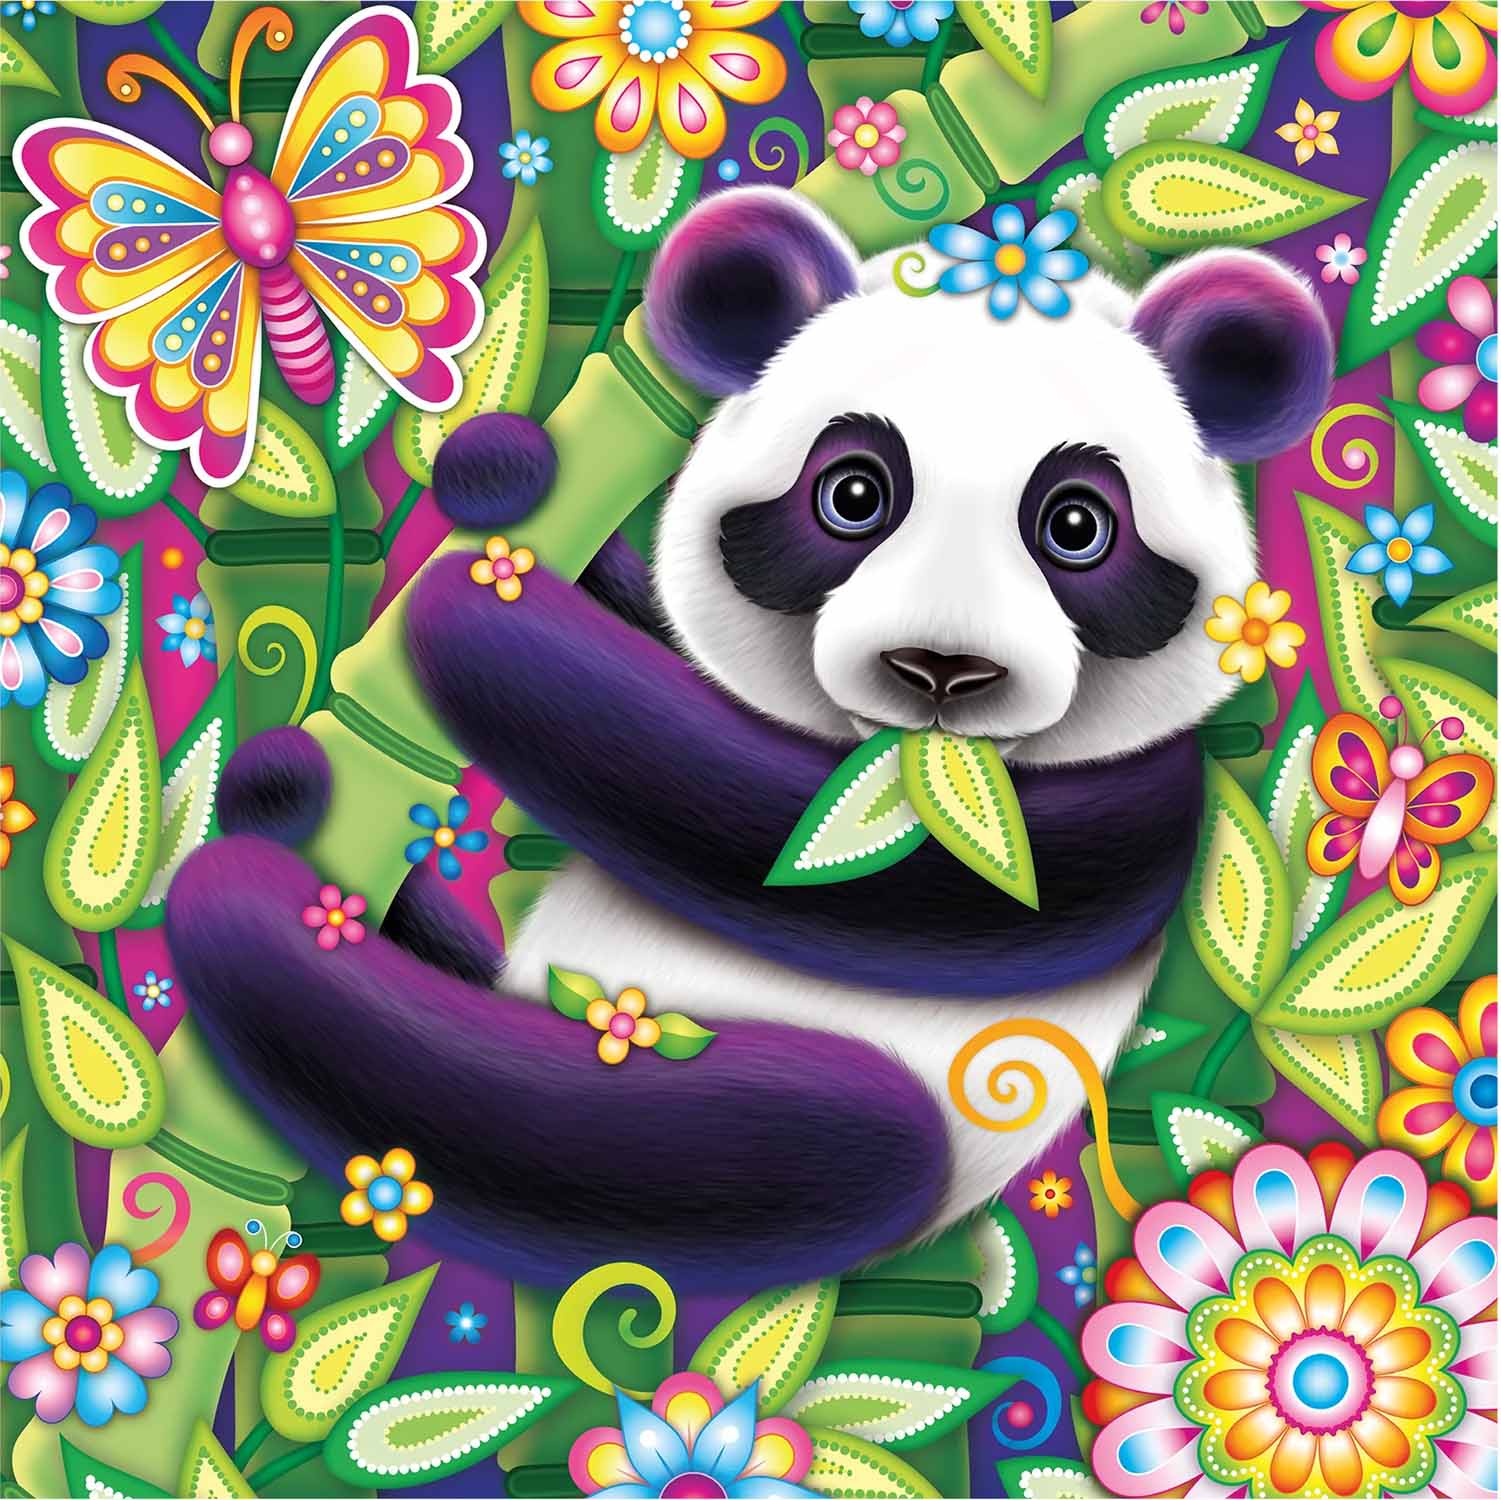 Groovy Animals - Panda Animals Jigsaw Puzzle